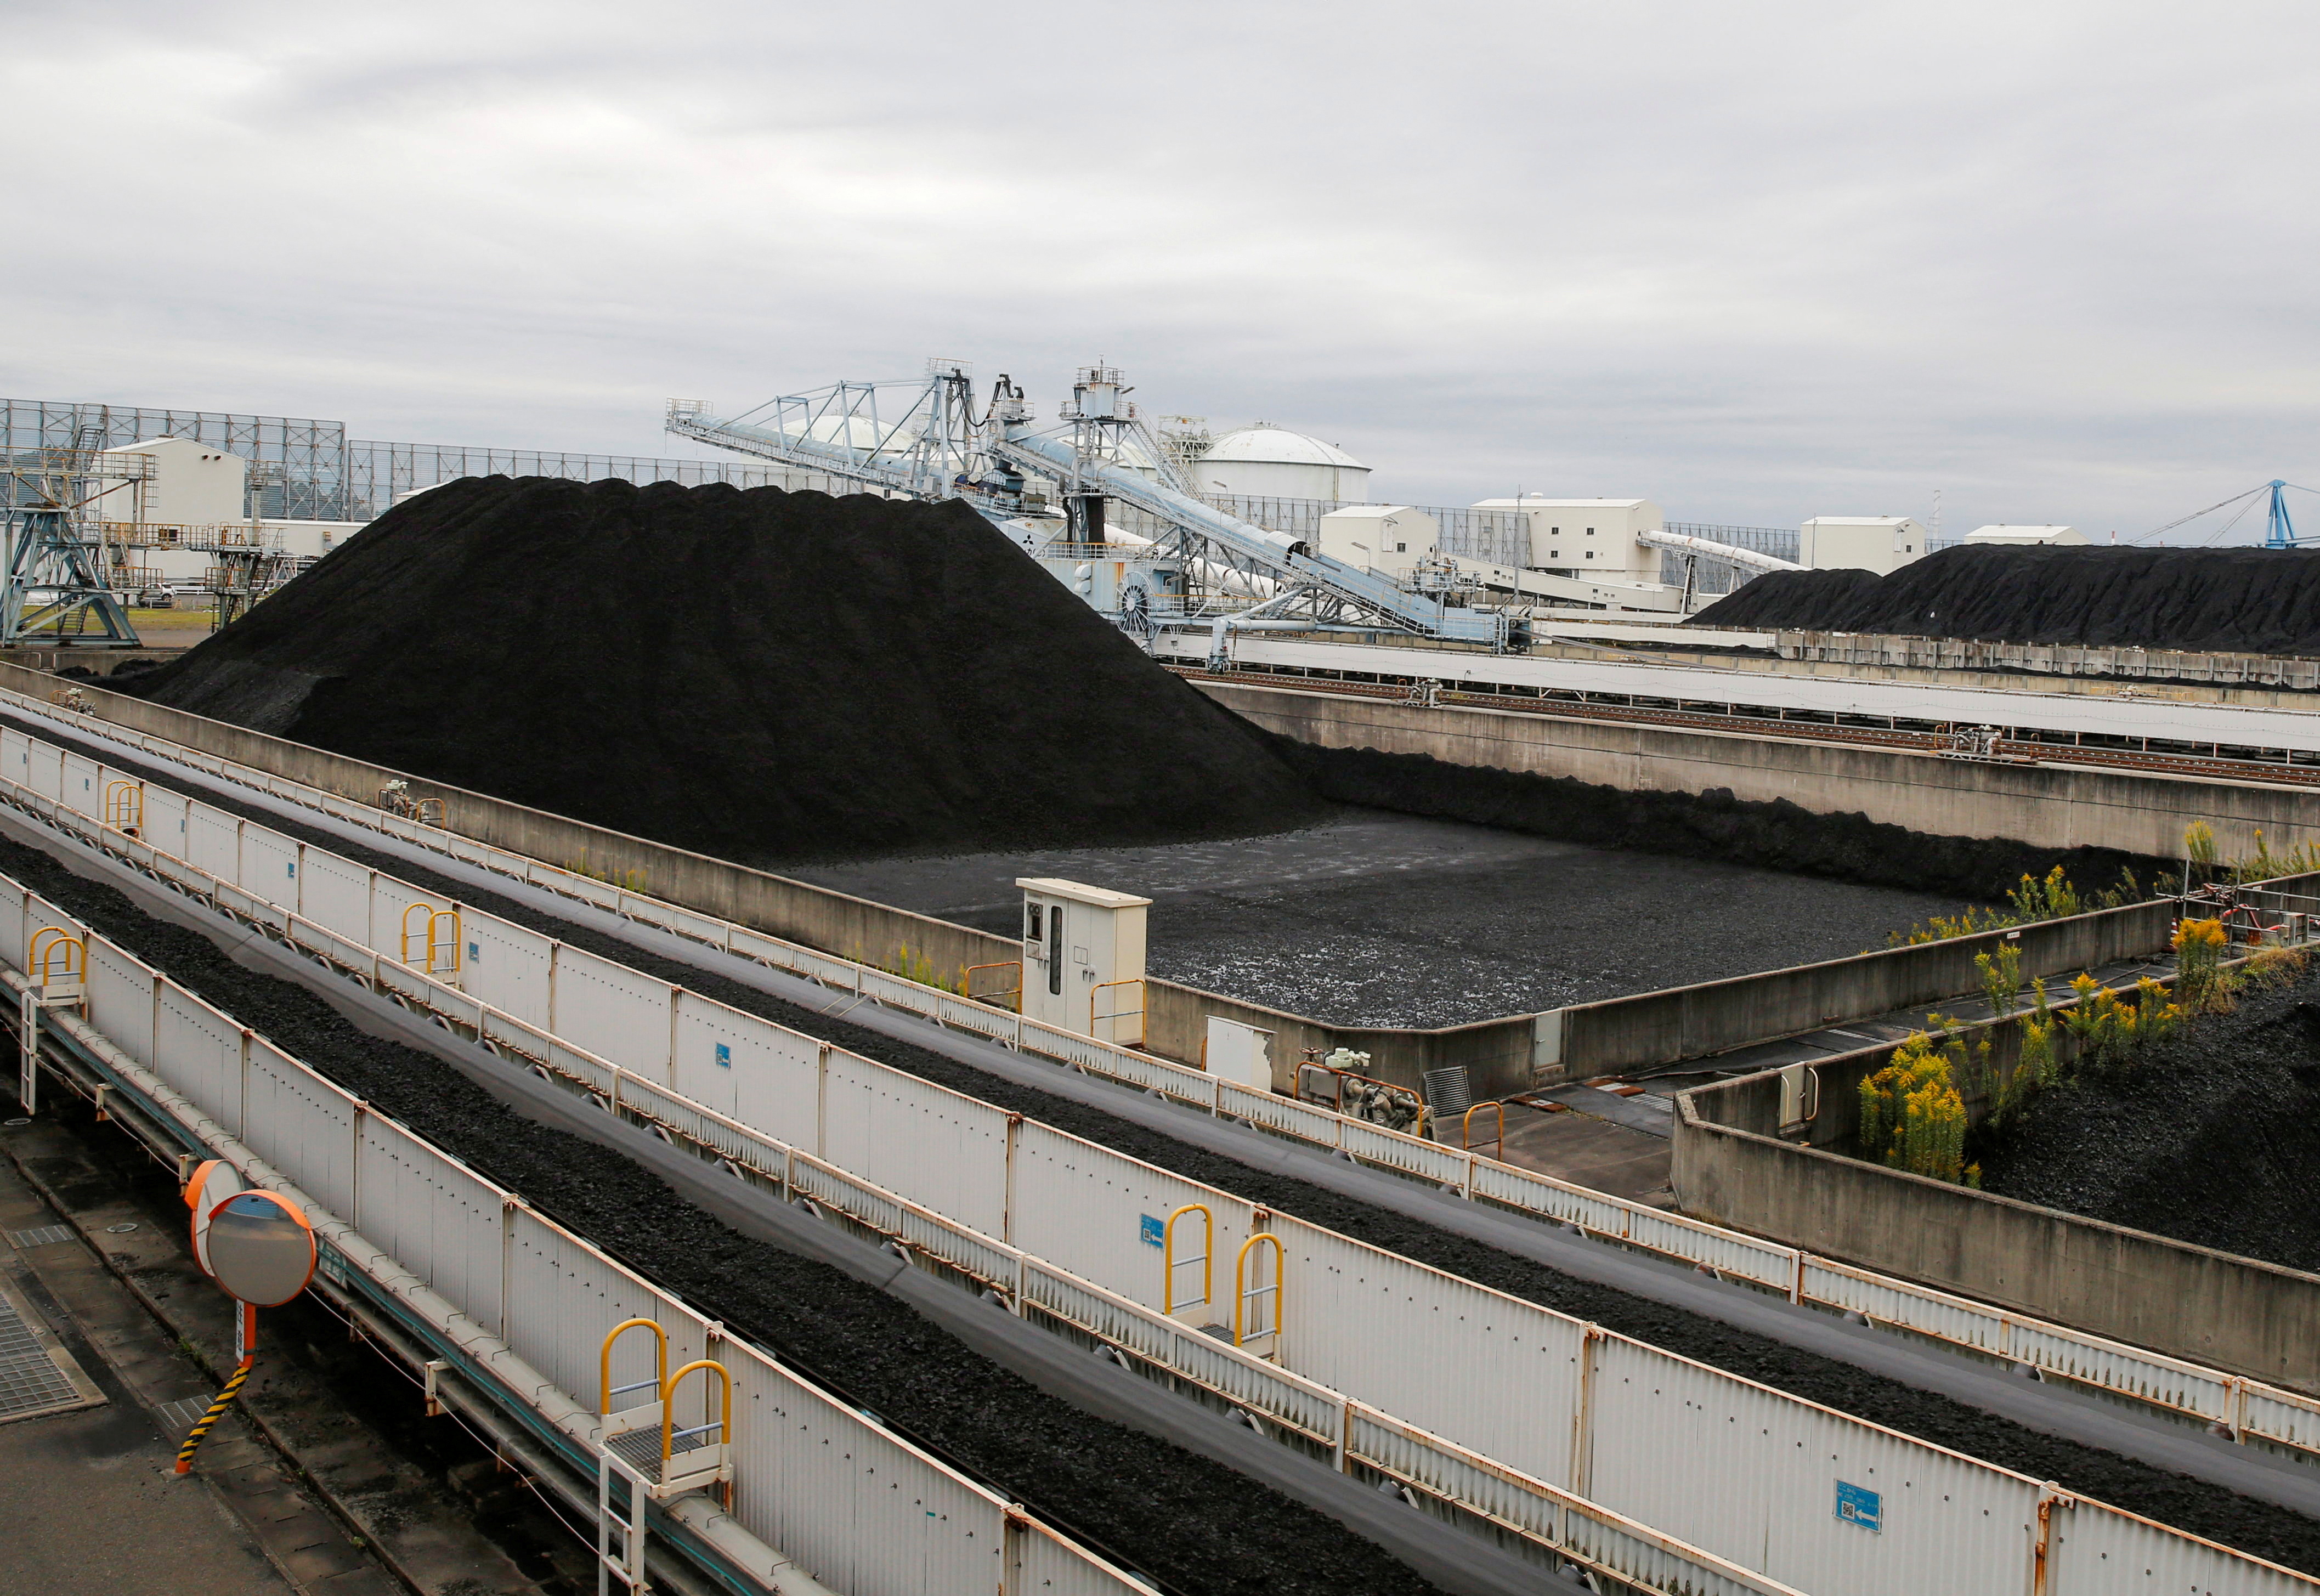 Coal piles are seen at JERA's Hekinan thermal power station in Hekinan, central Japan